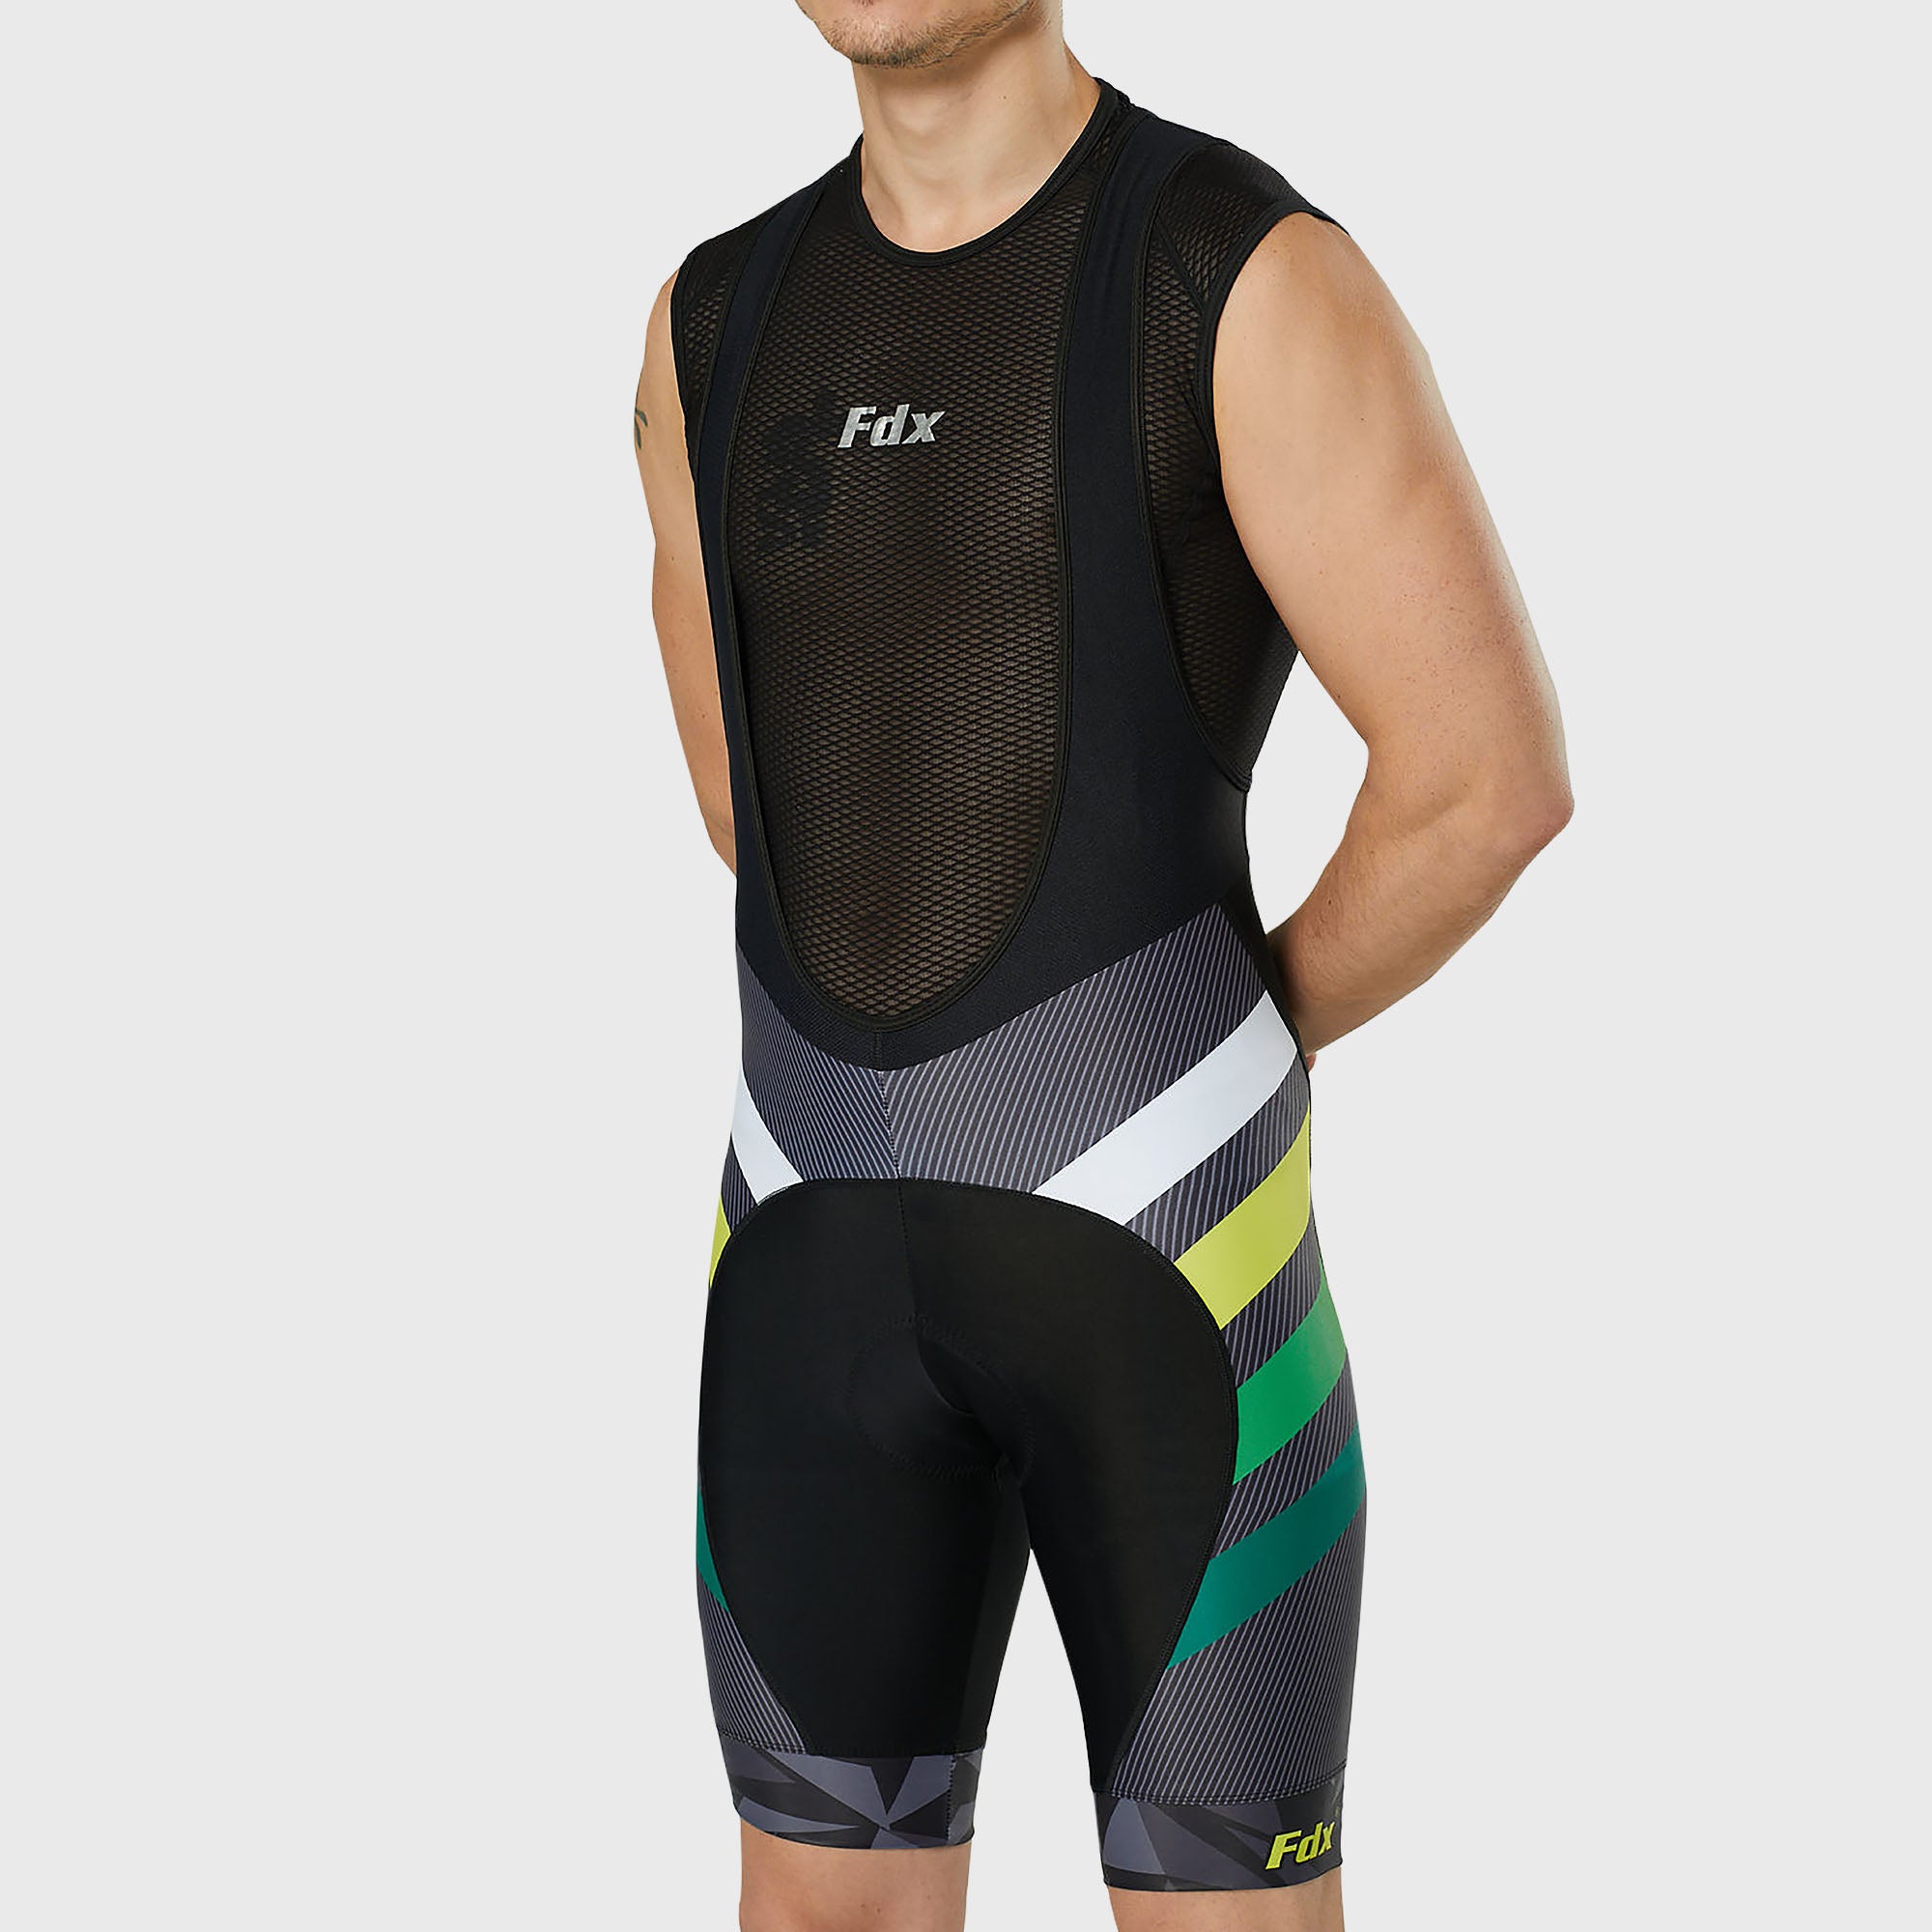 fdx cycling shorts